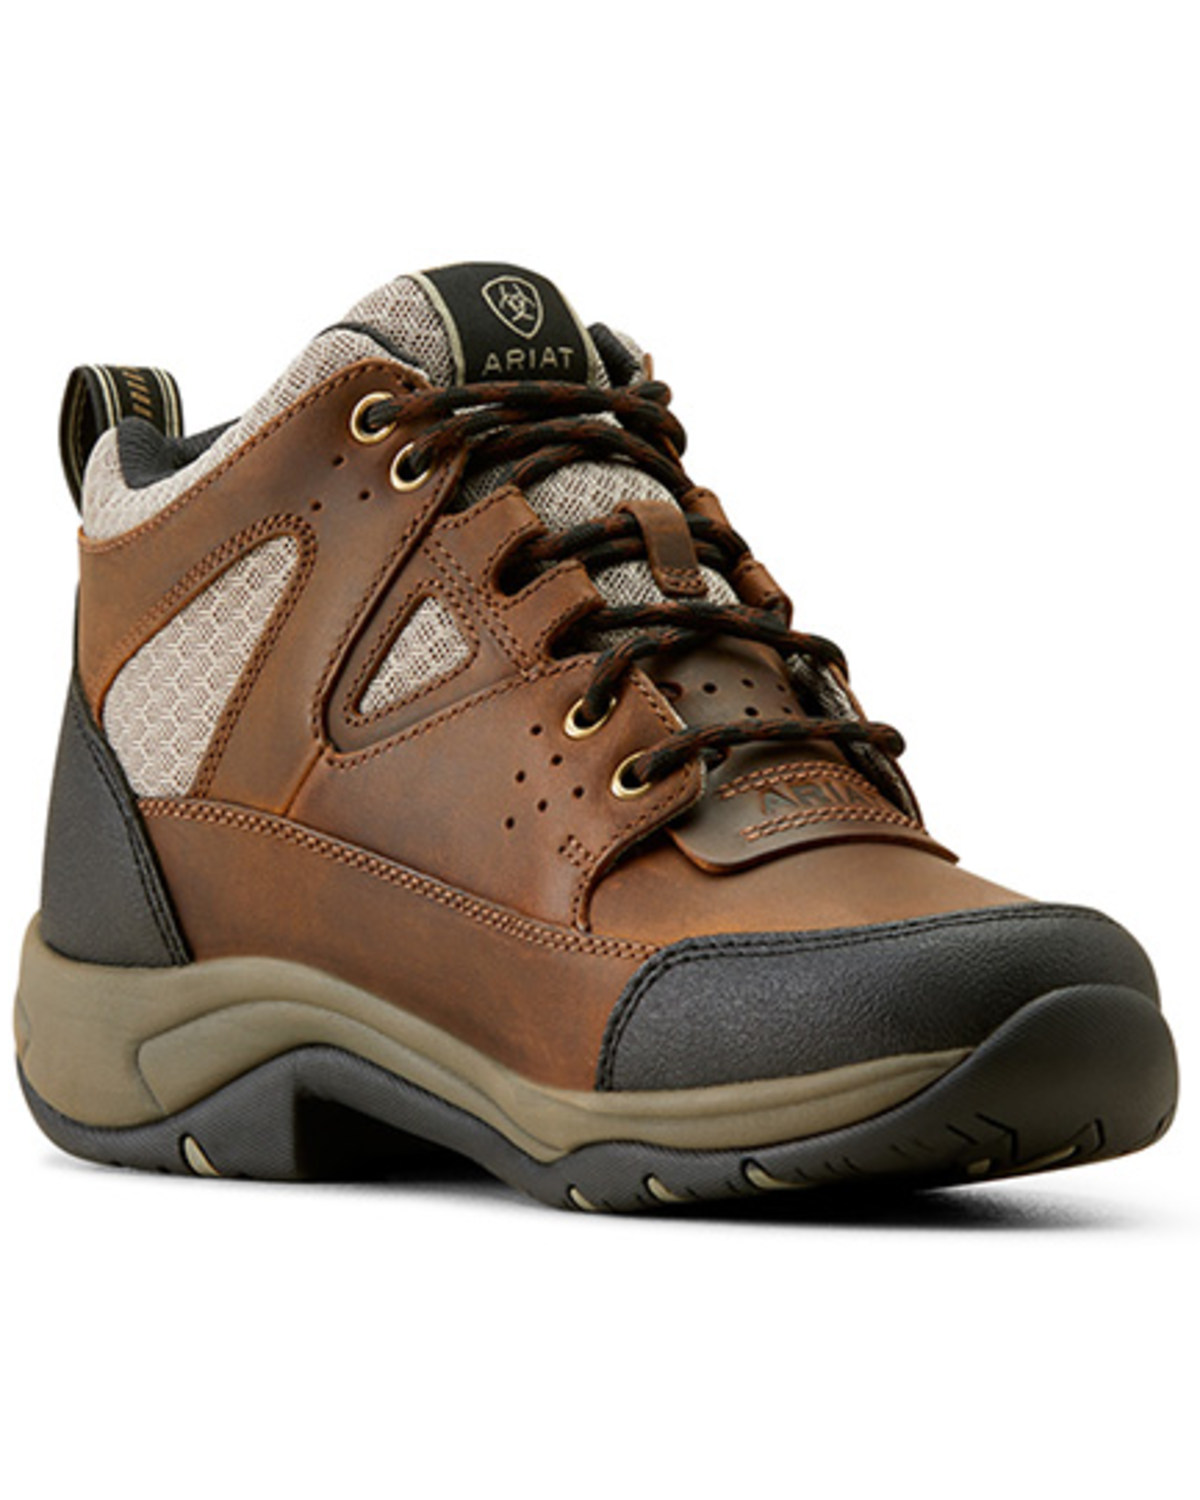 Ariat Women's Terrain VentTEK 360 Hiking Boots - Soft Toe